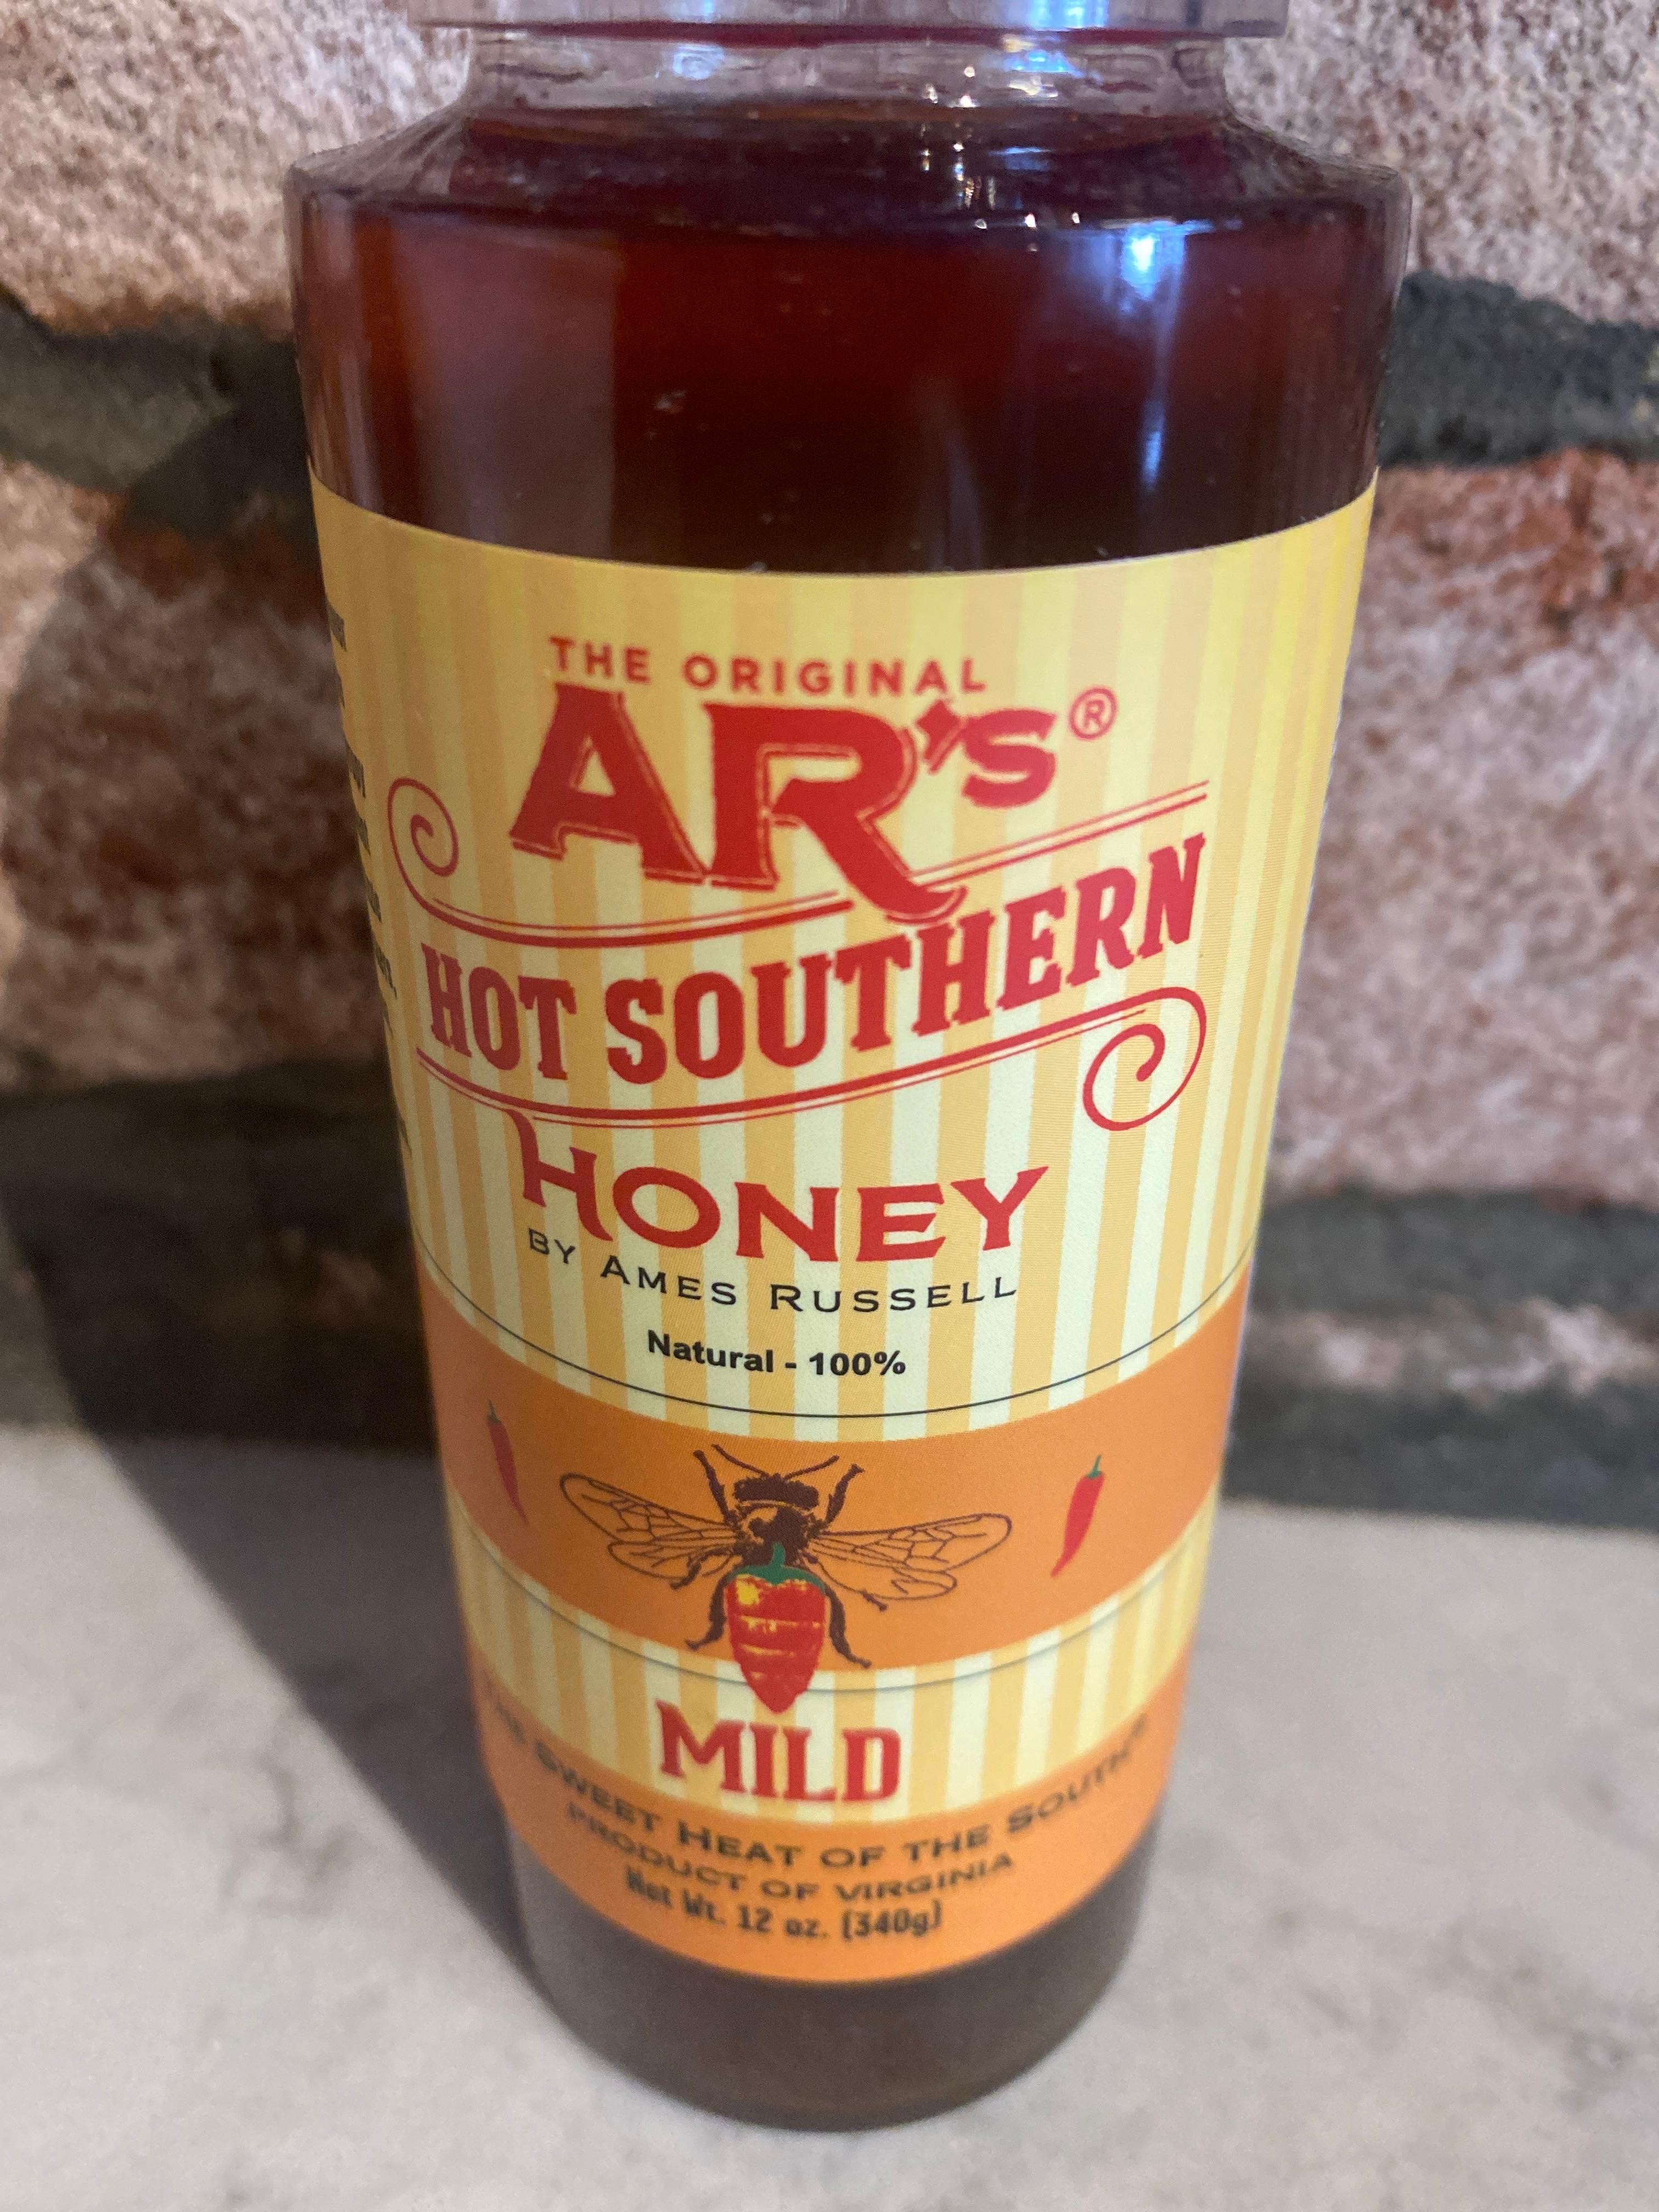 AR's Southern Mild Honey